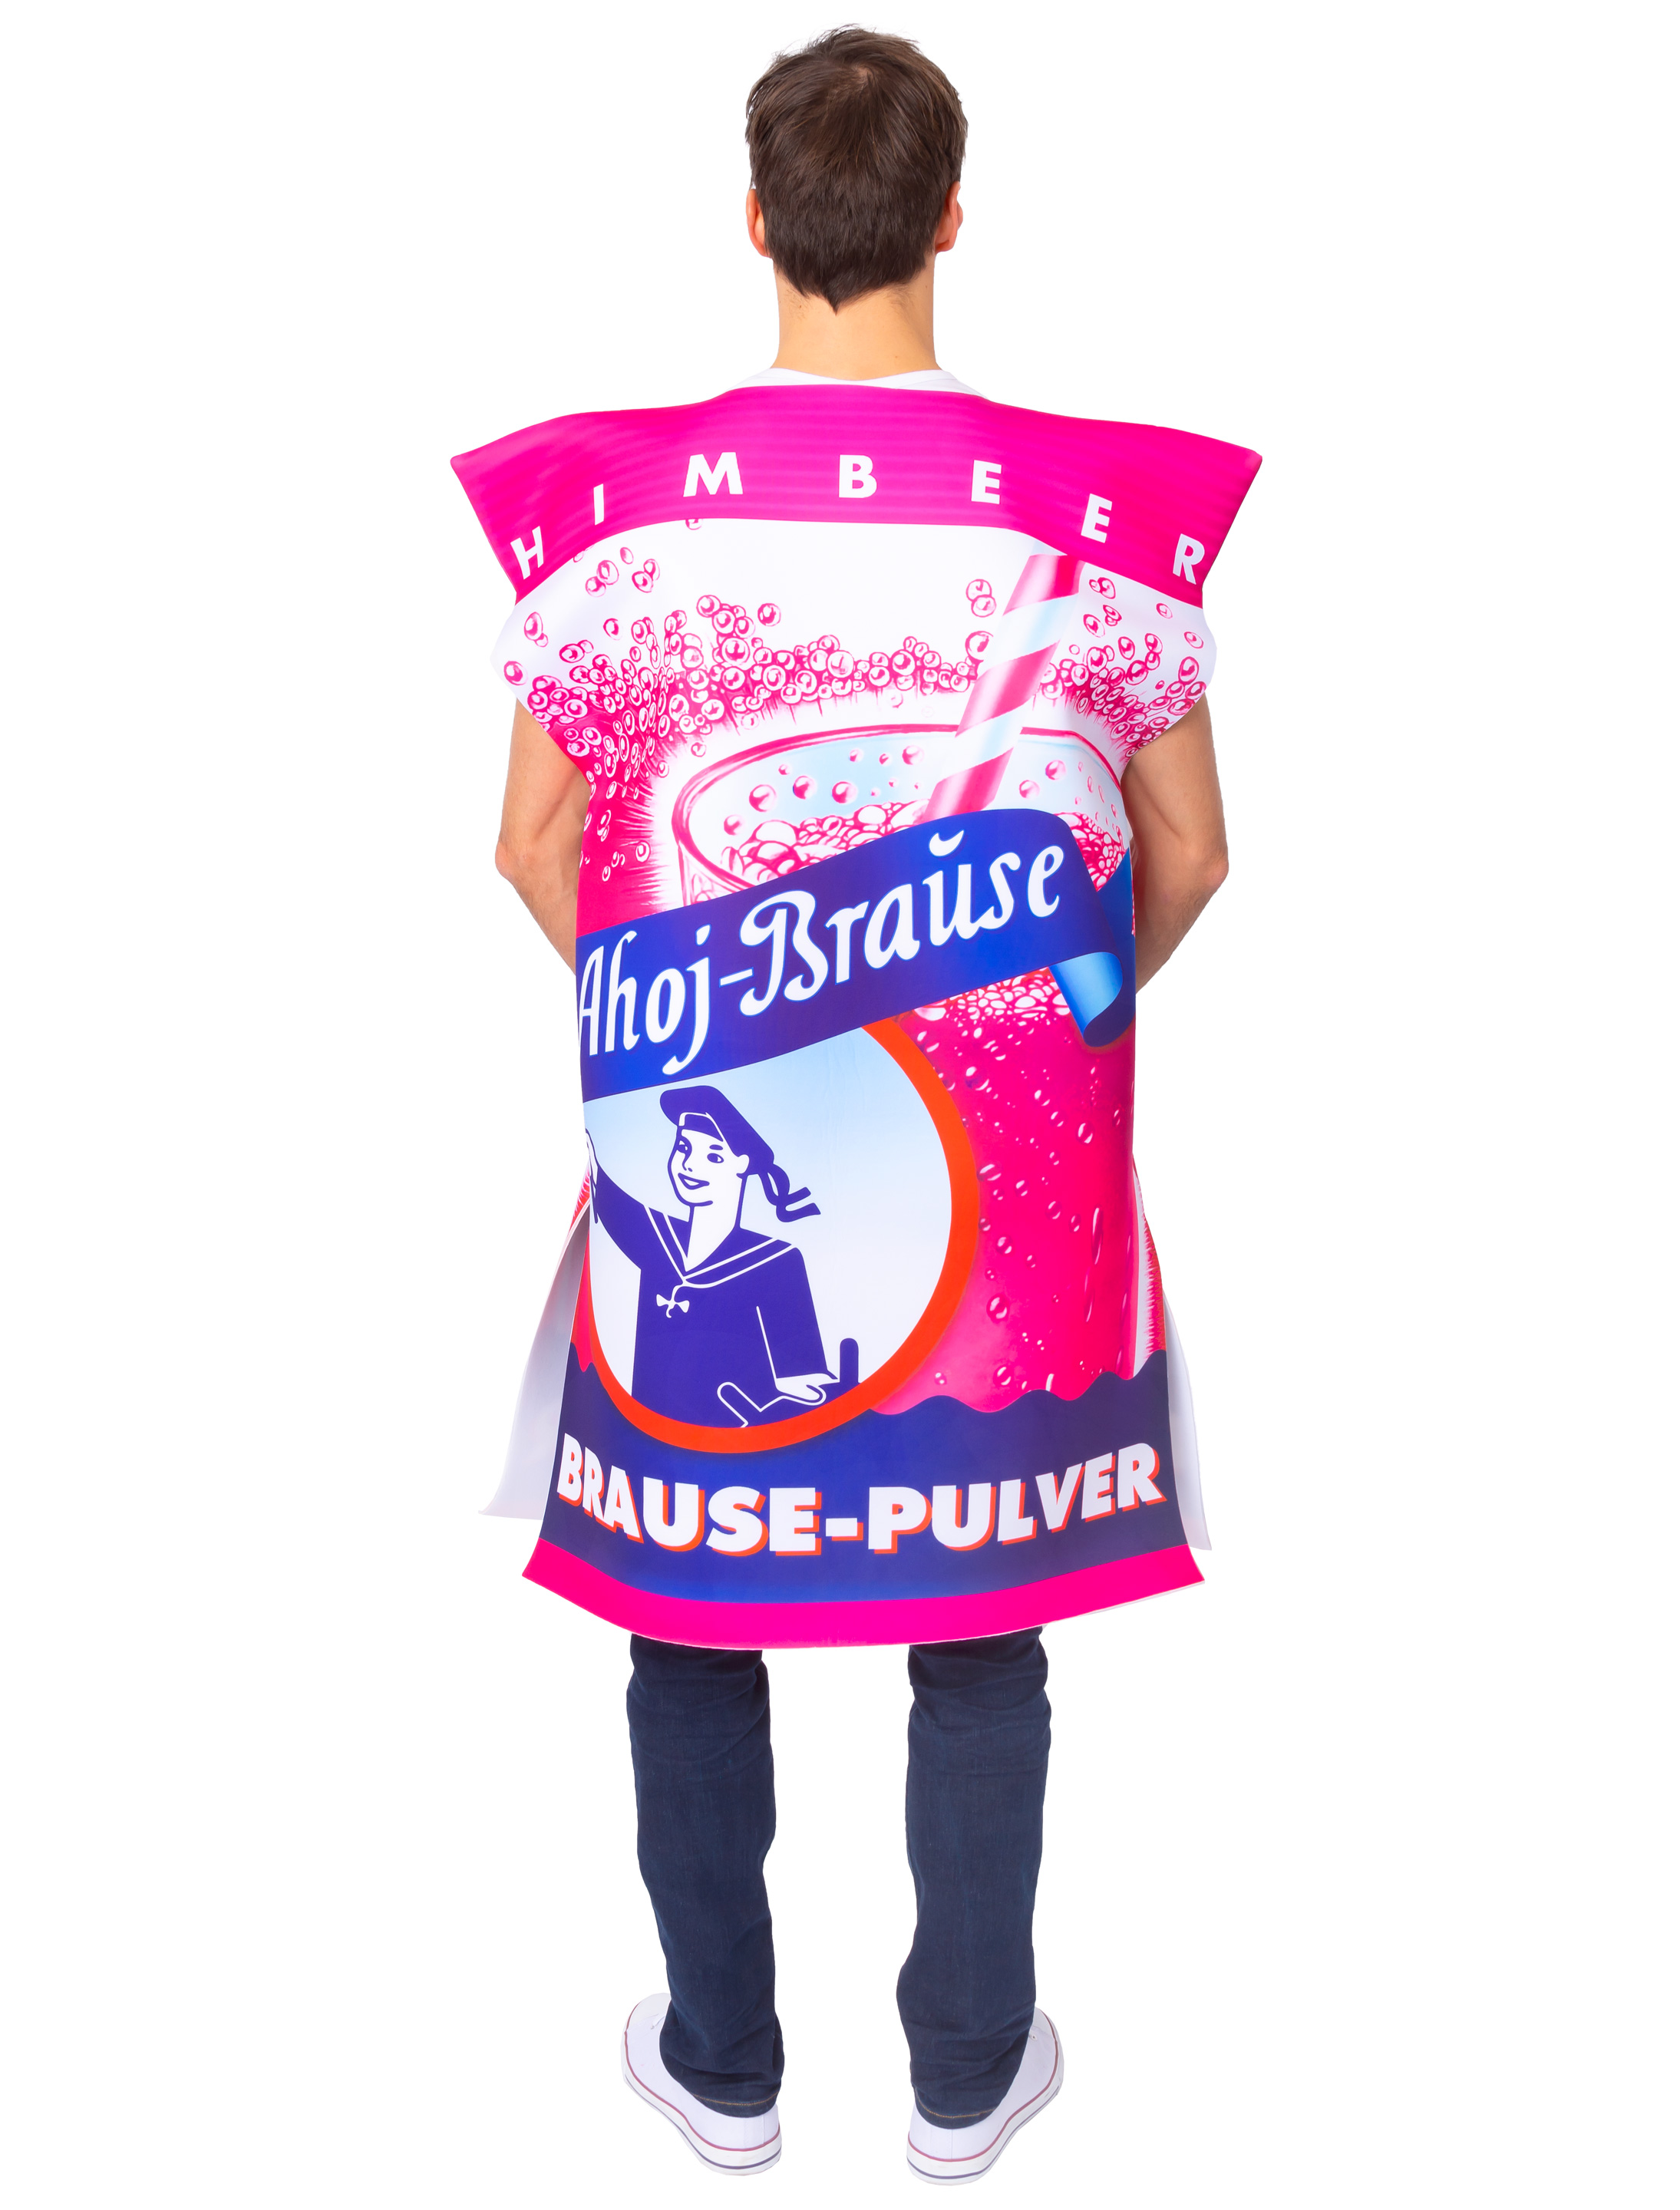 Kostüm Ahoj-Brause Himbeer pink one size